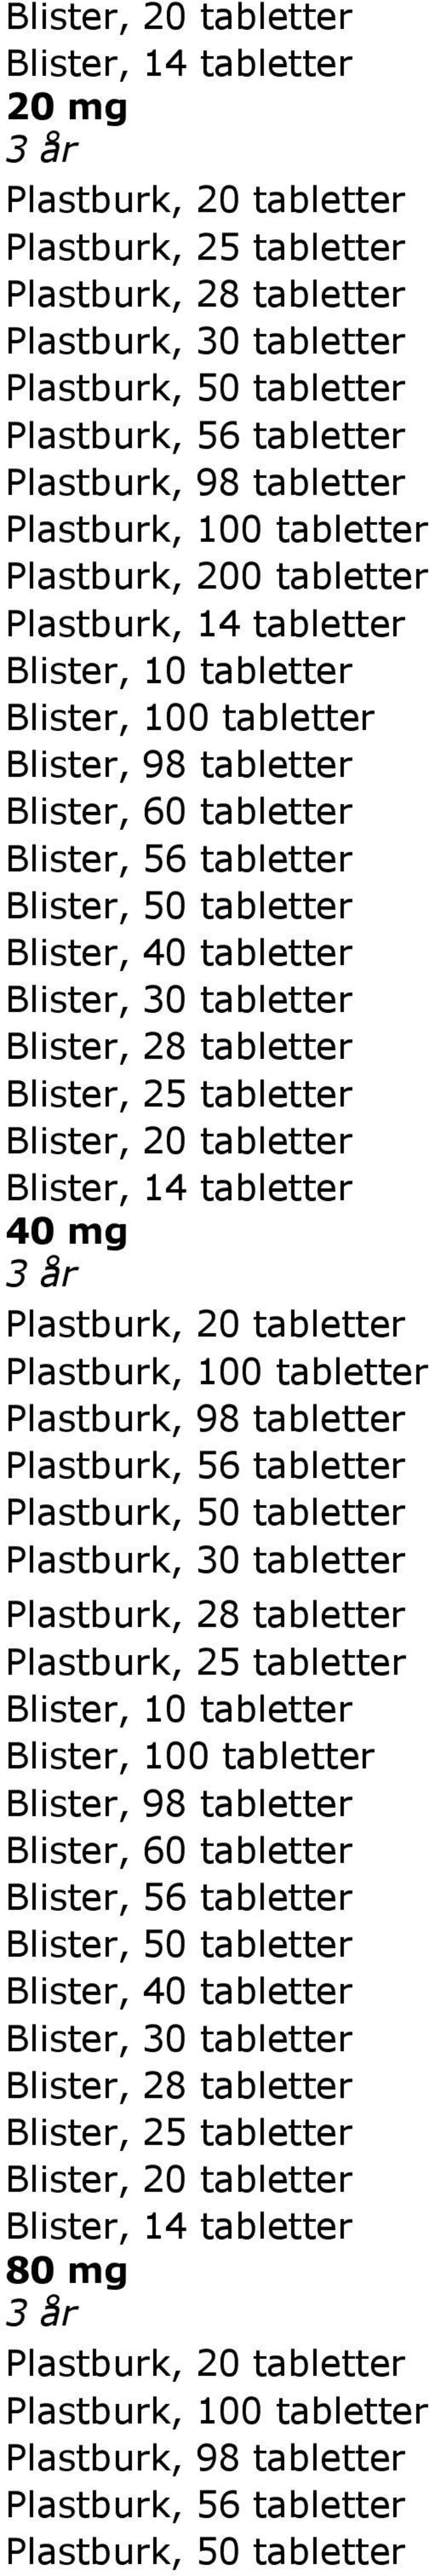 tabletter Blister, 40 tabletter Blister, 25 tabletter Blister, 20 tabletter Blister, 14 tabletter 40 mg 3 år Plastburk, 20 tabletter Plastburk, 100 tabletter Plastburk, 98 tabletter Plastburk, 56